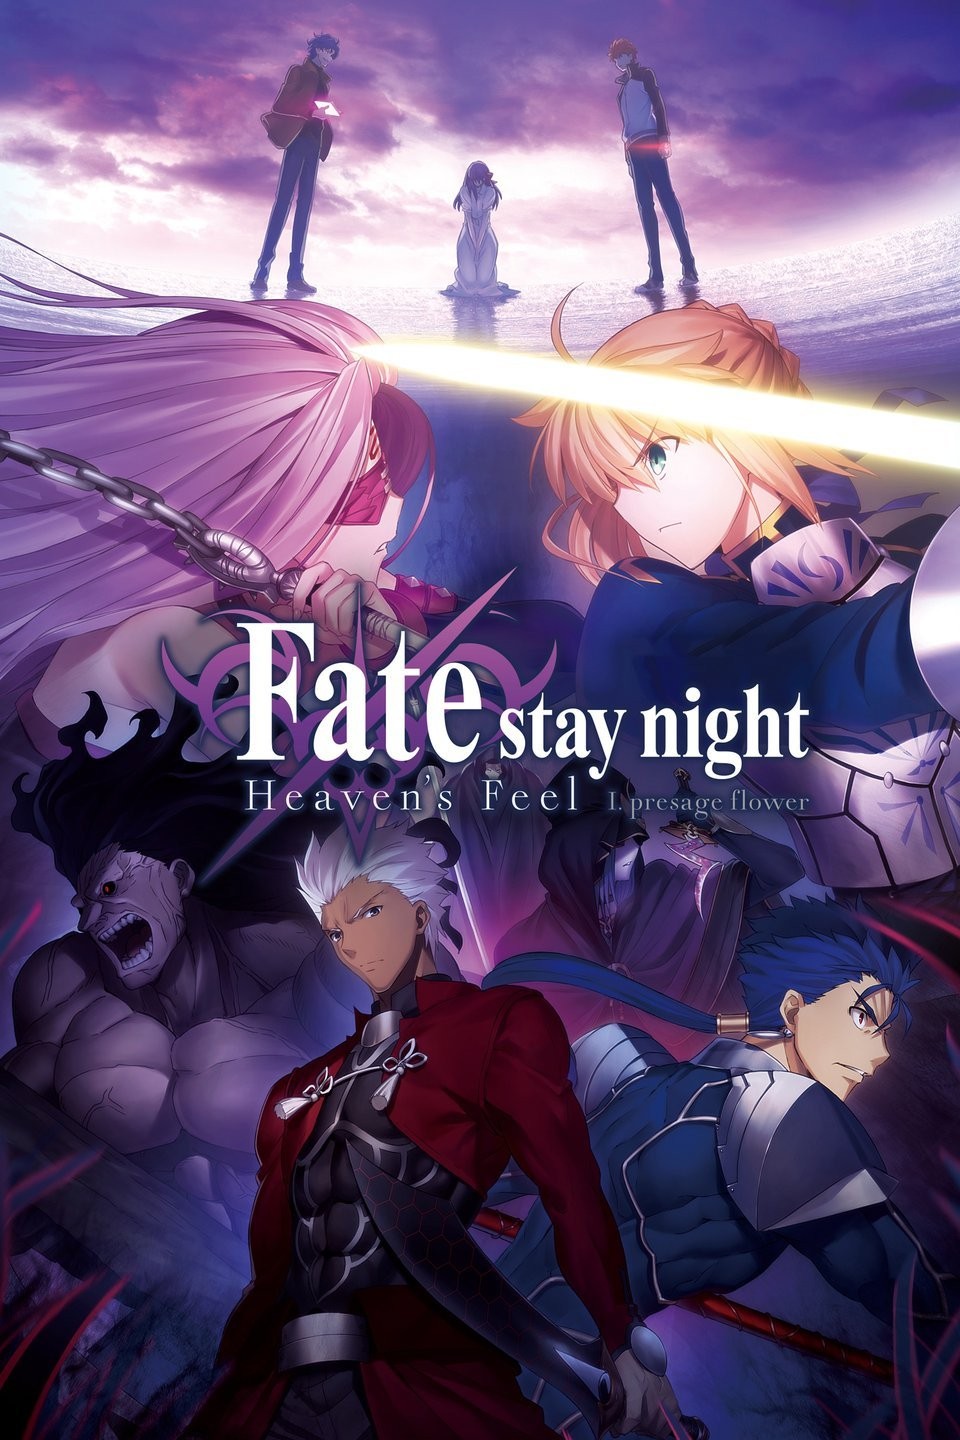 Fate stay night - volume 1